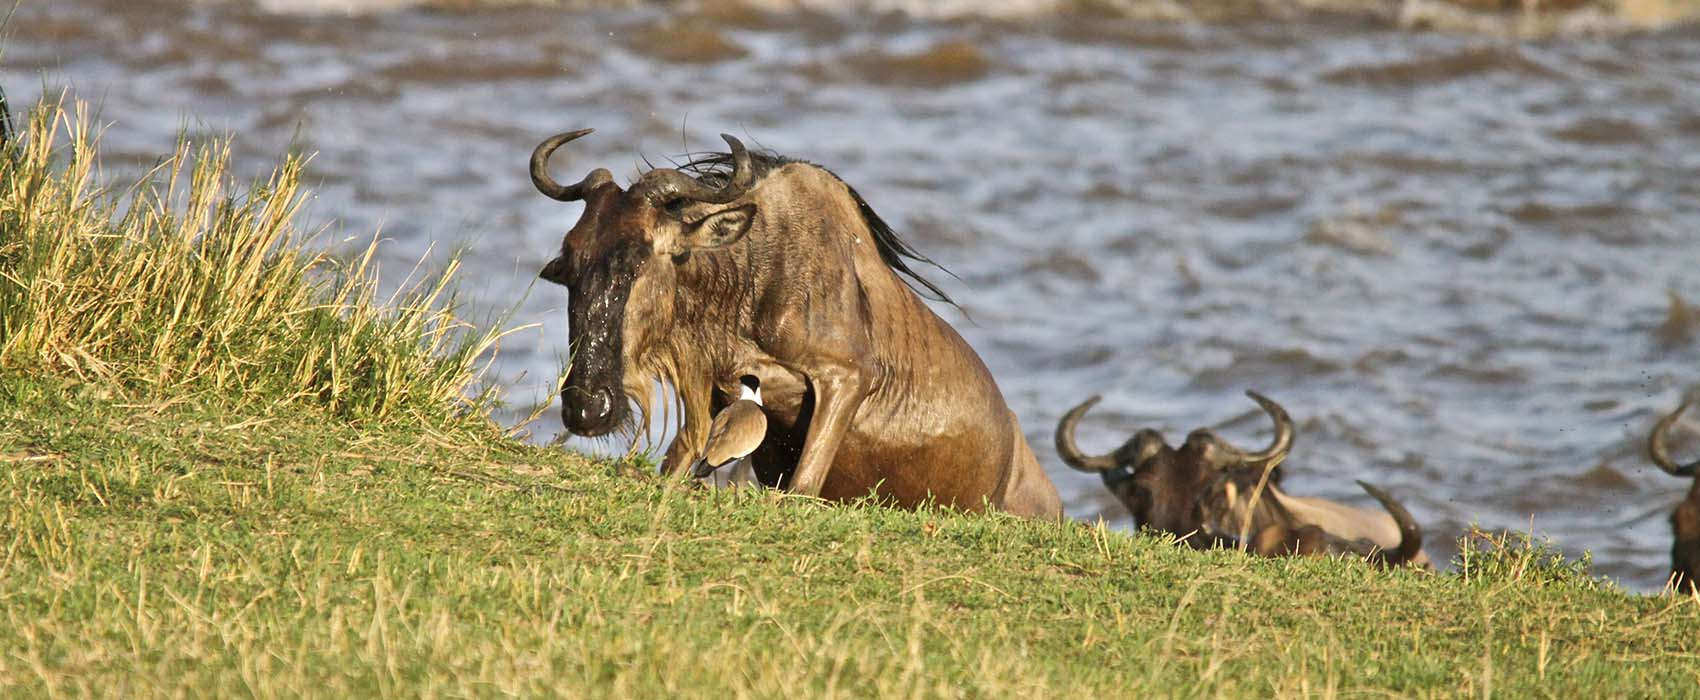 River crossing wildebeest migration safaris